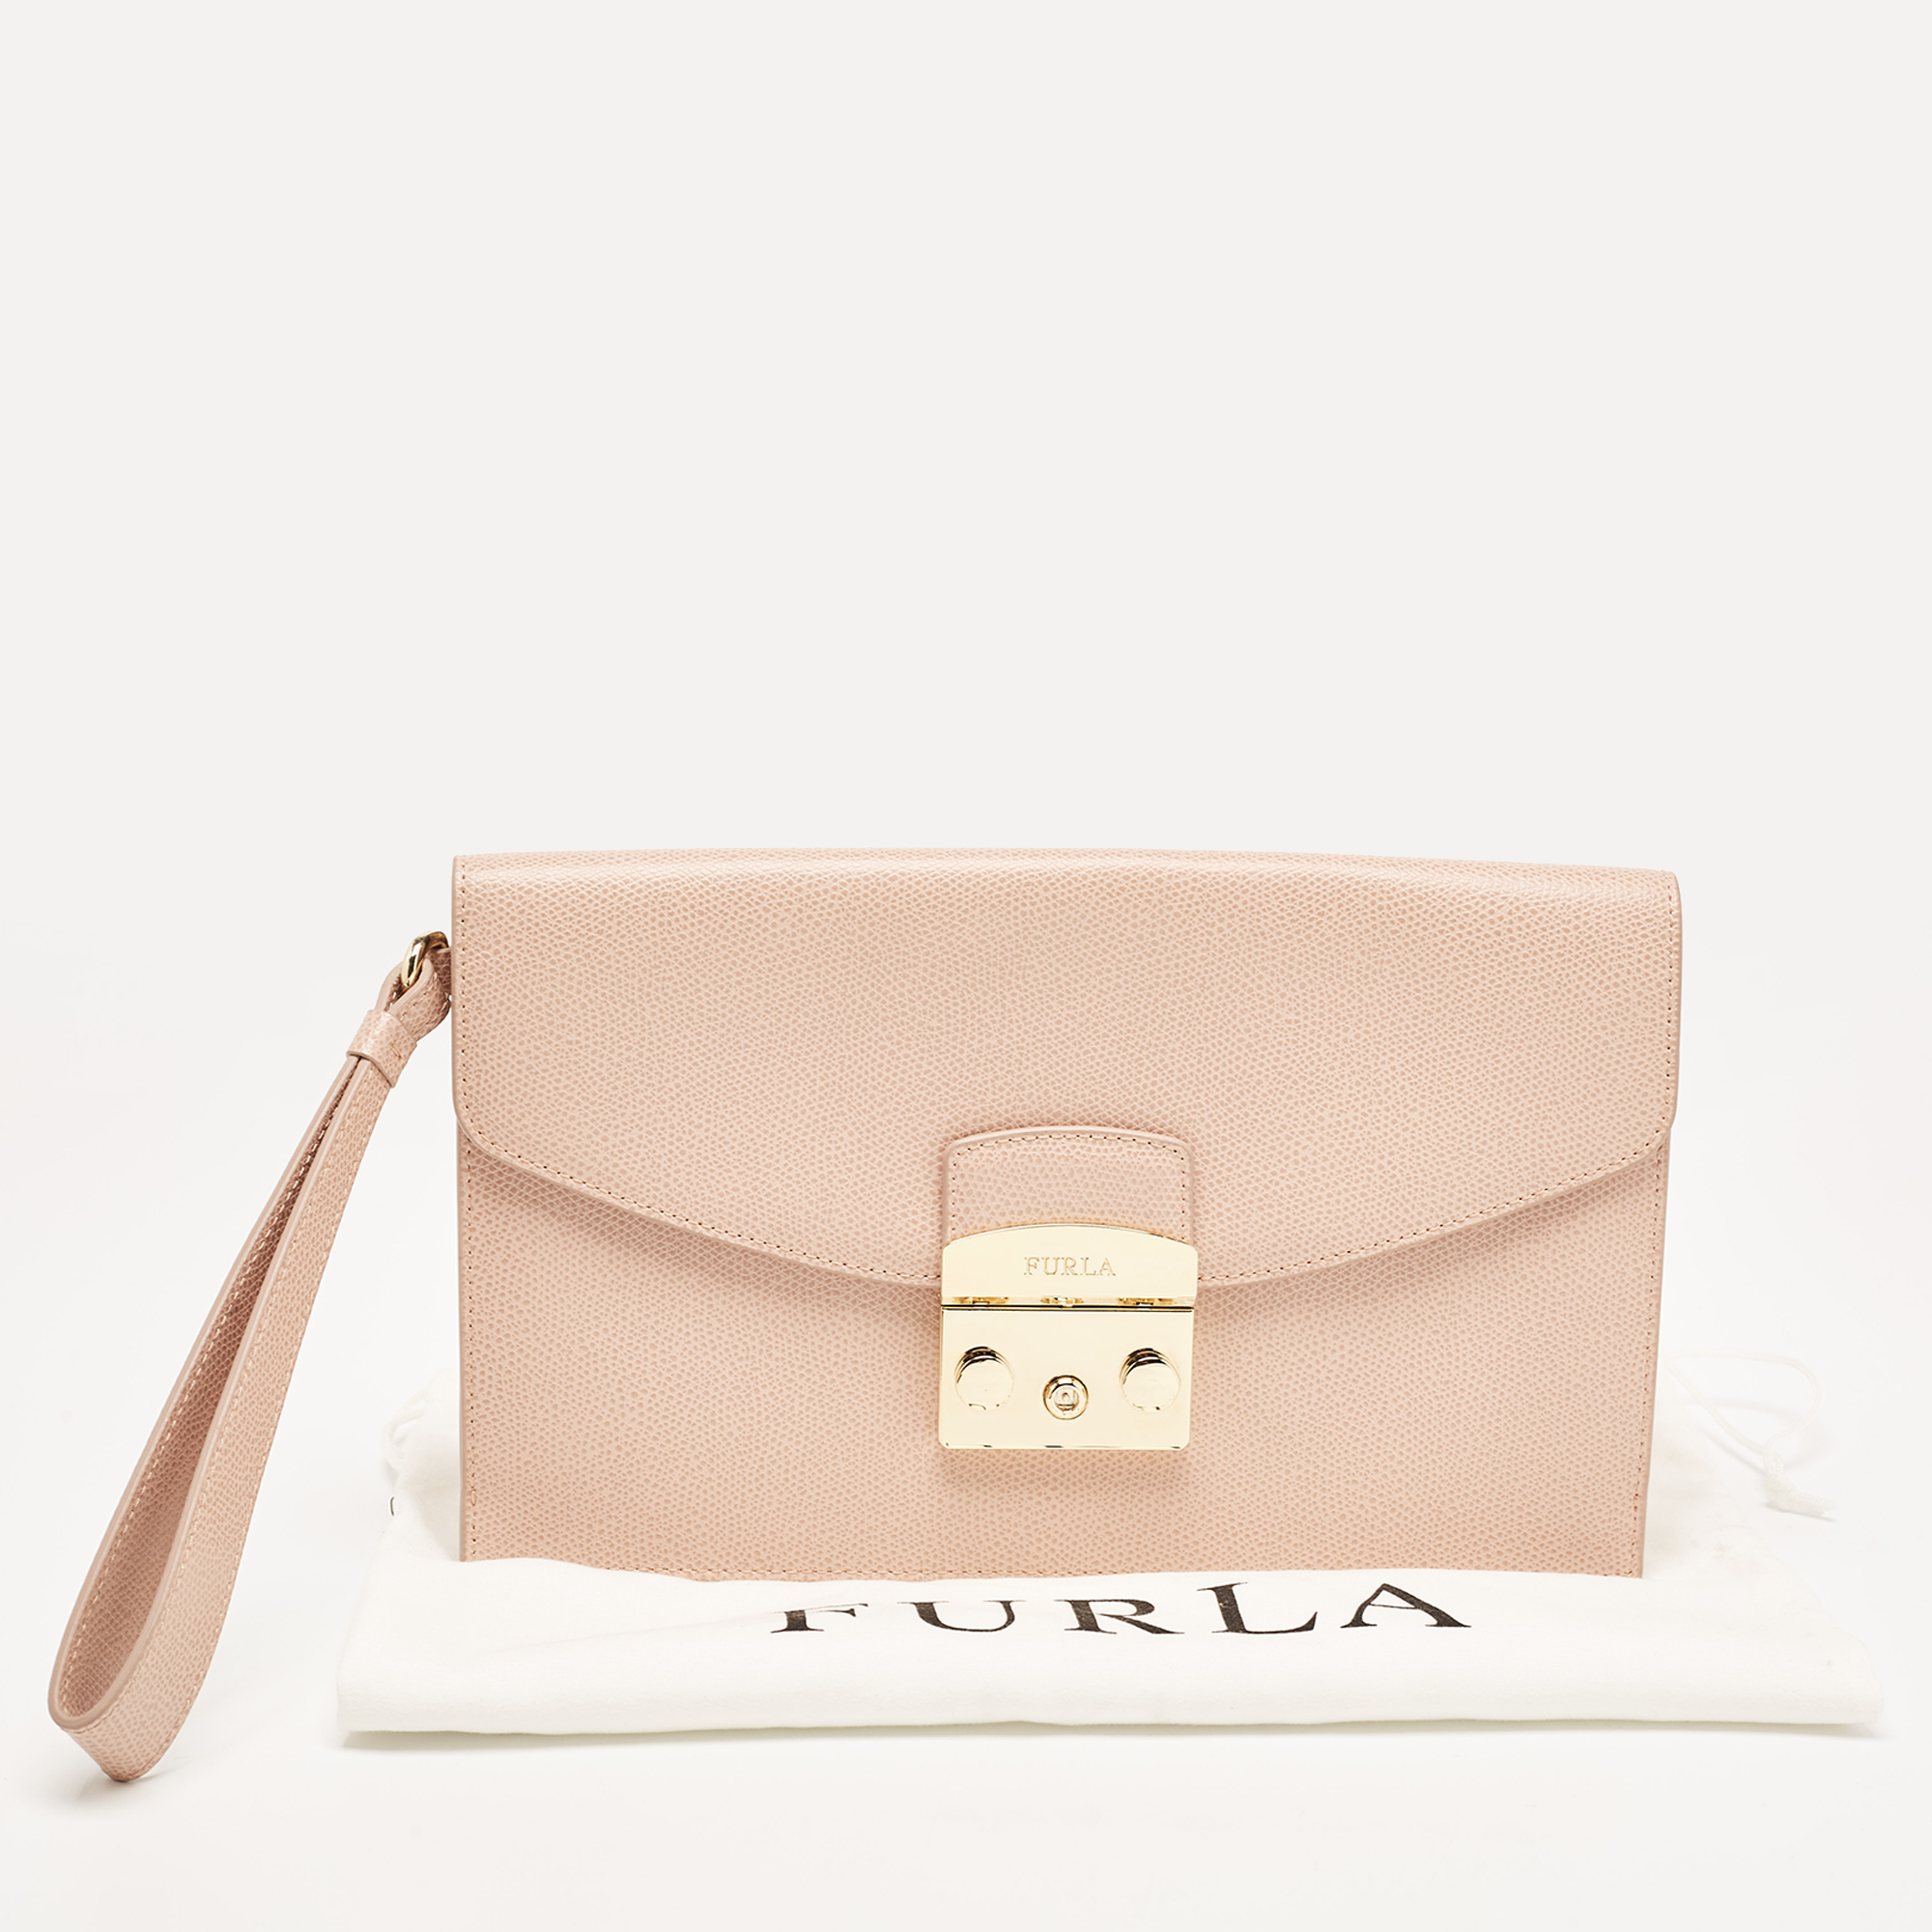 Furla Pink Leather Metropolis Envelope Wristlet Clutch